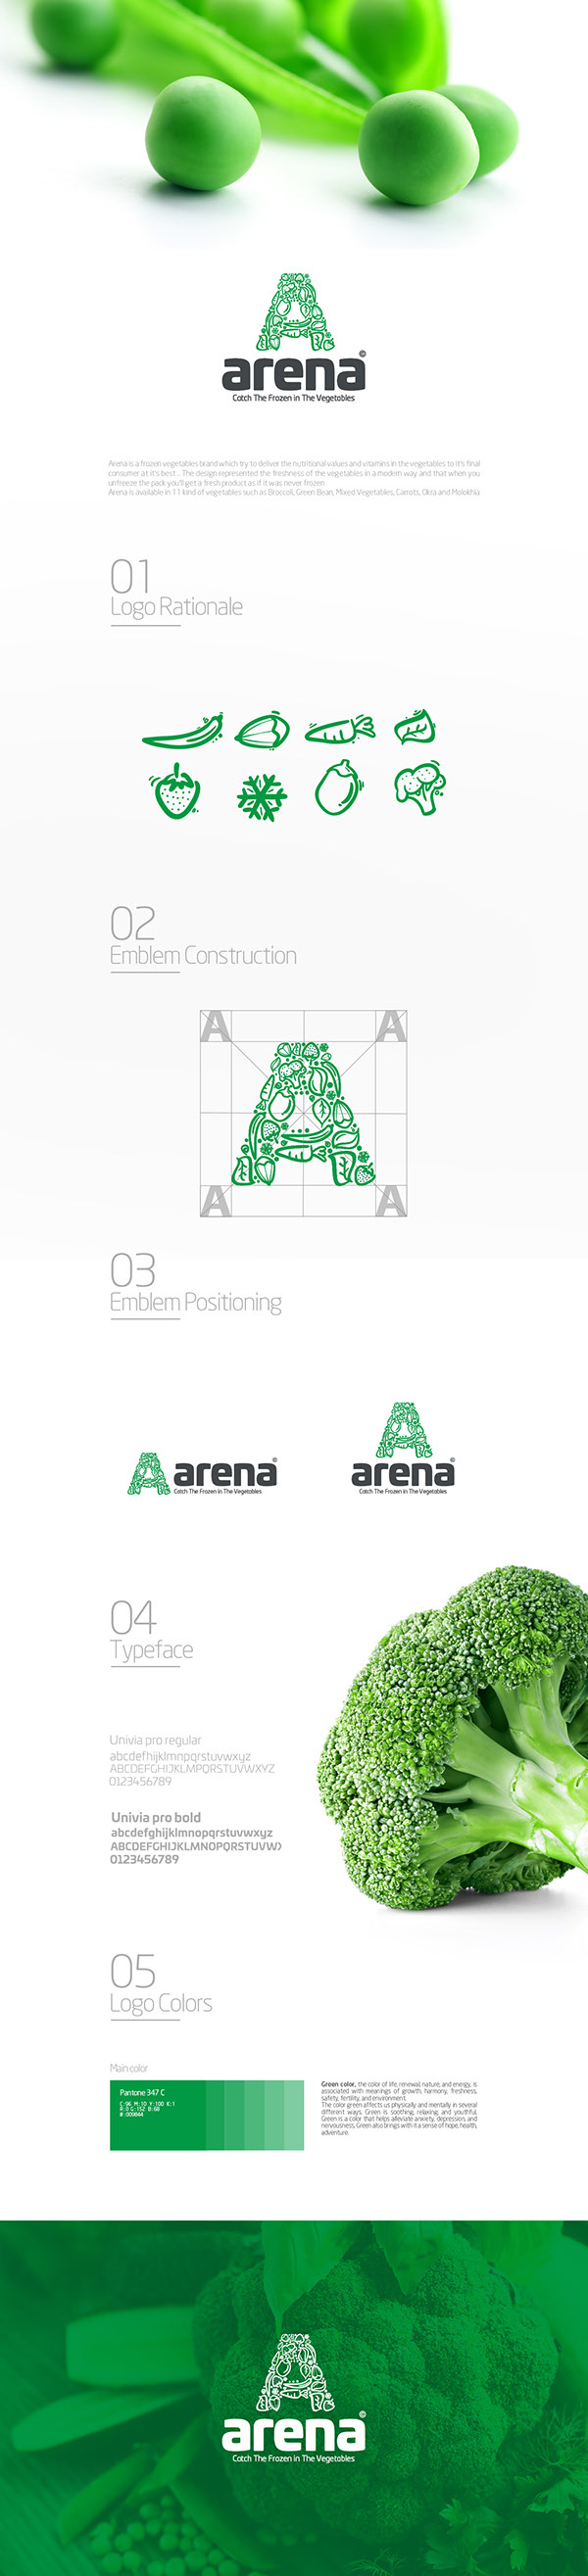 Arena Branding